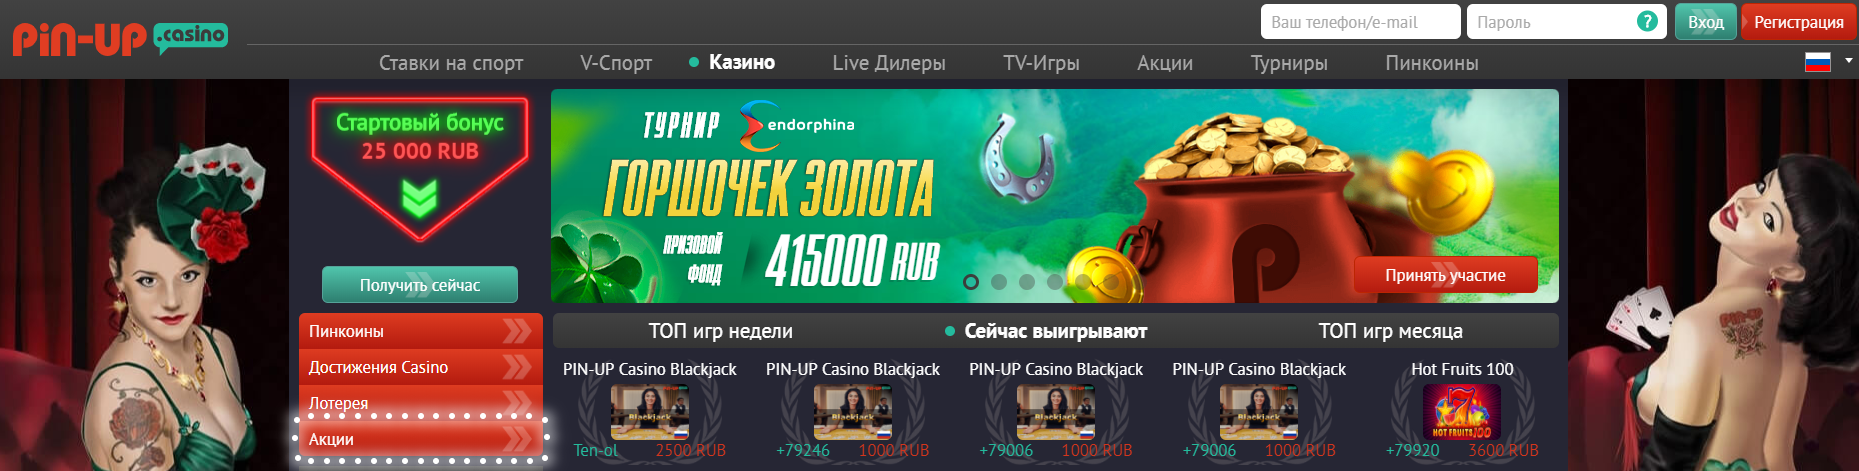 пин ап ставки casino pin up 6044d